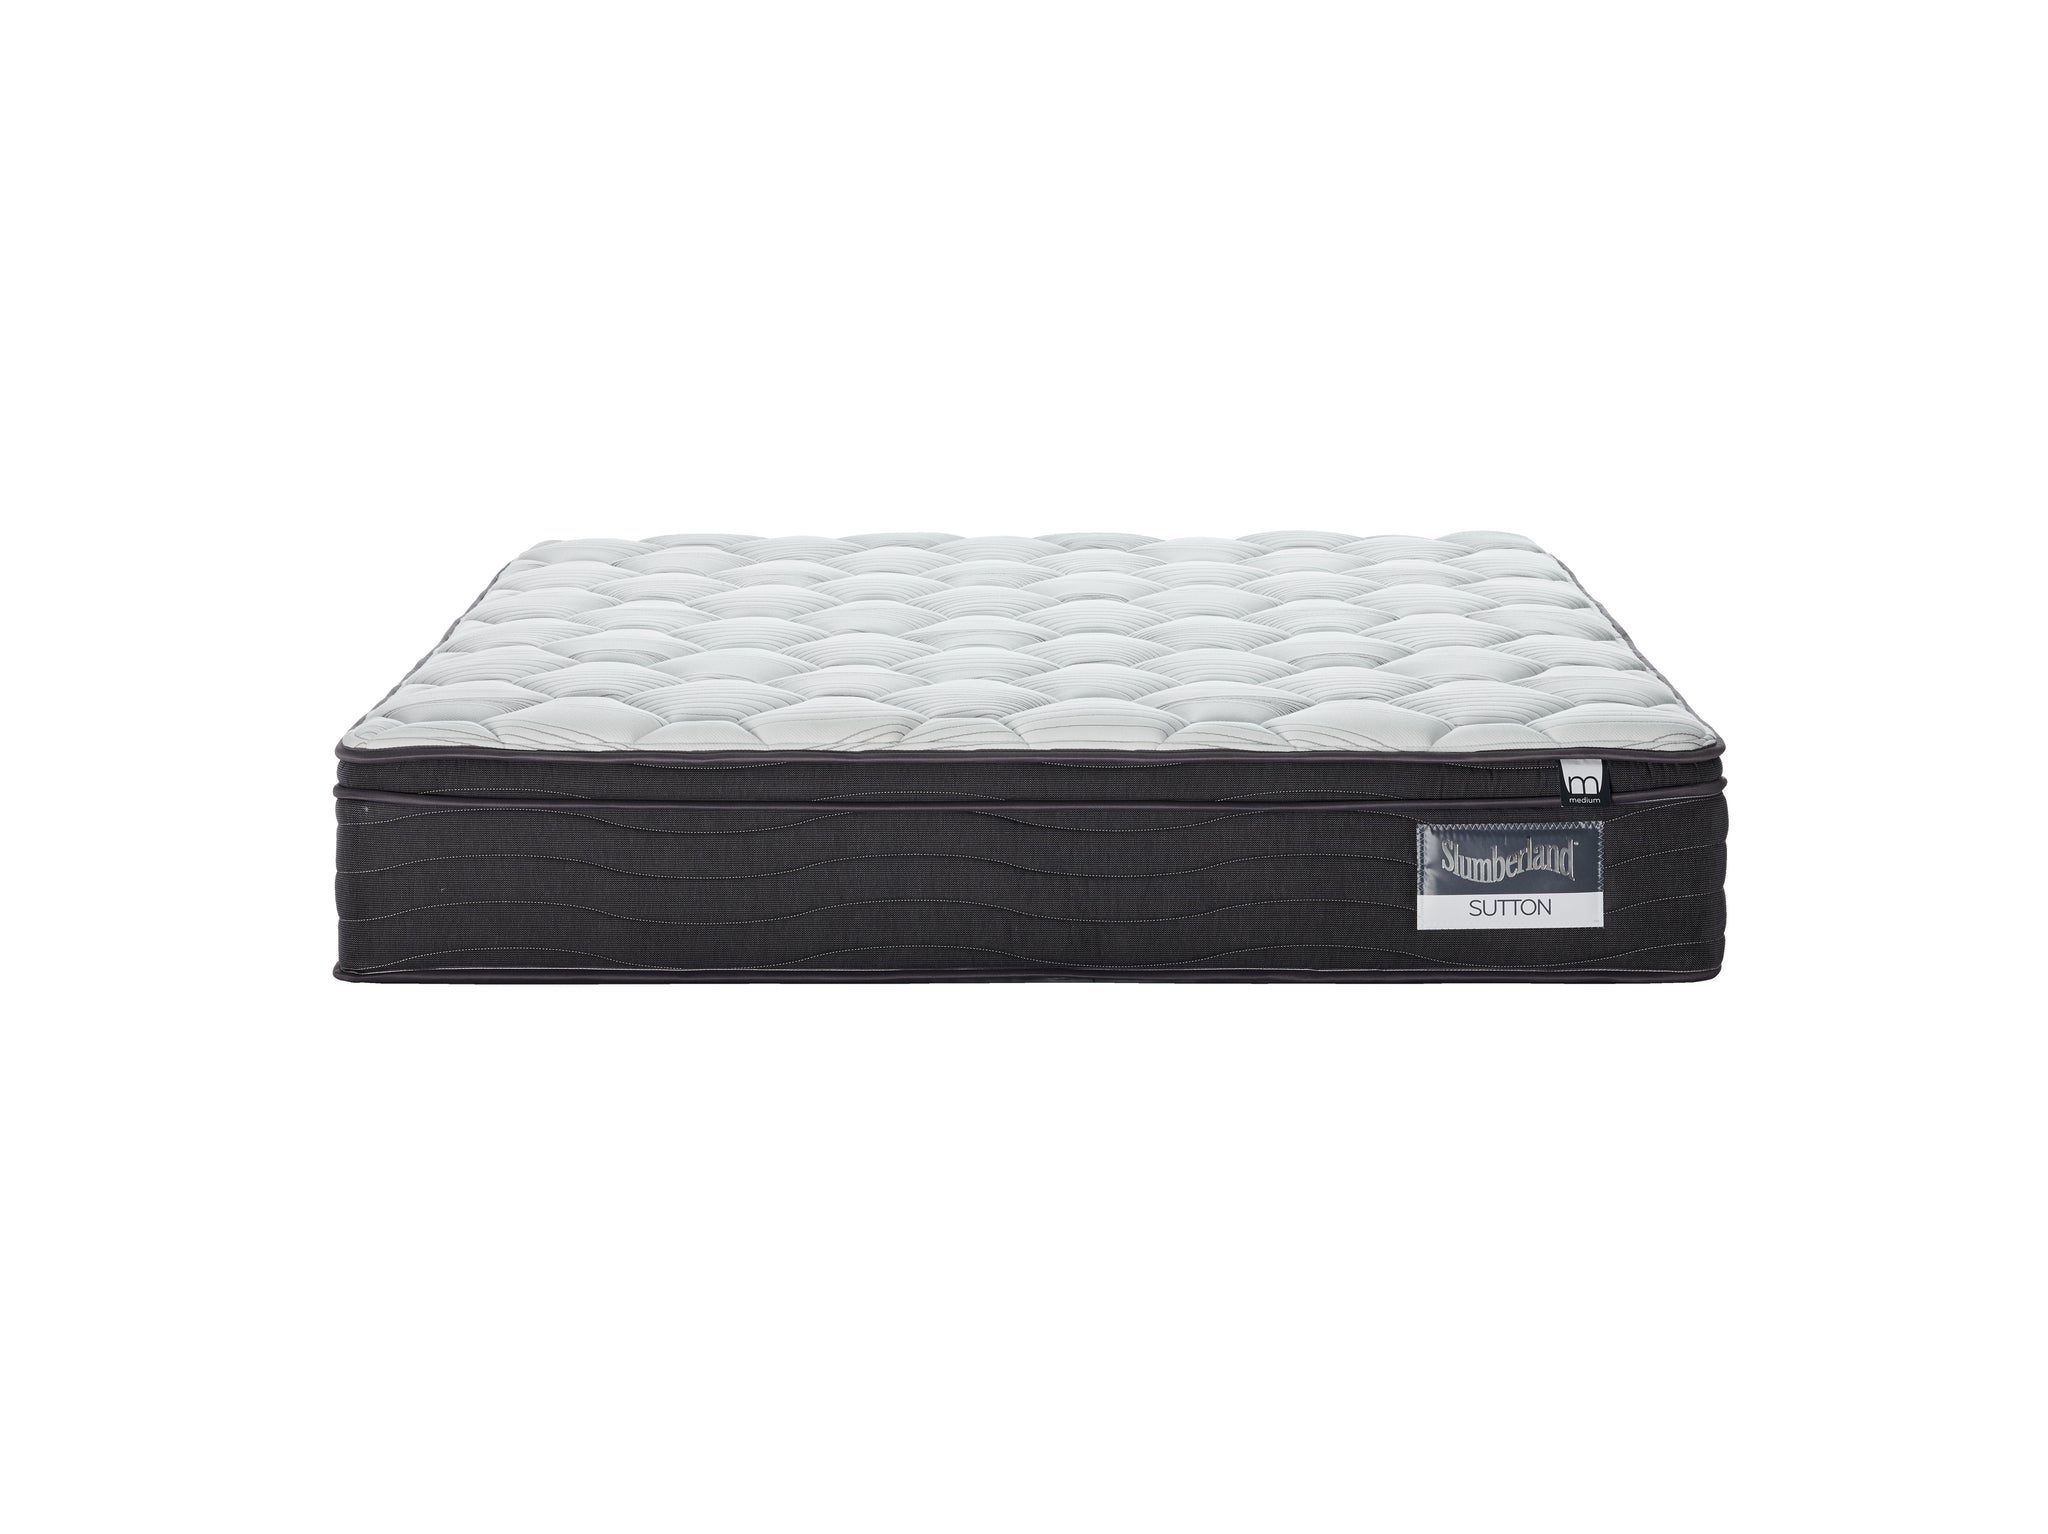 slumberland easy fit heated mattress cover kingsize